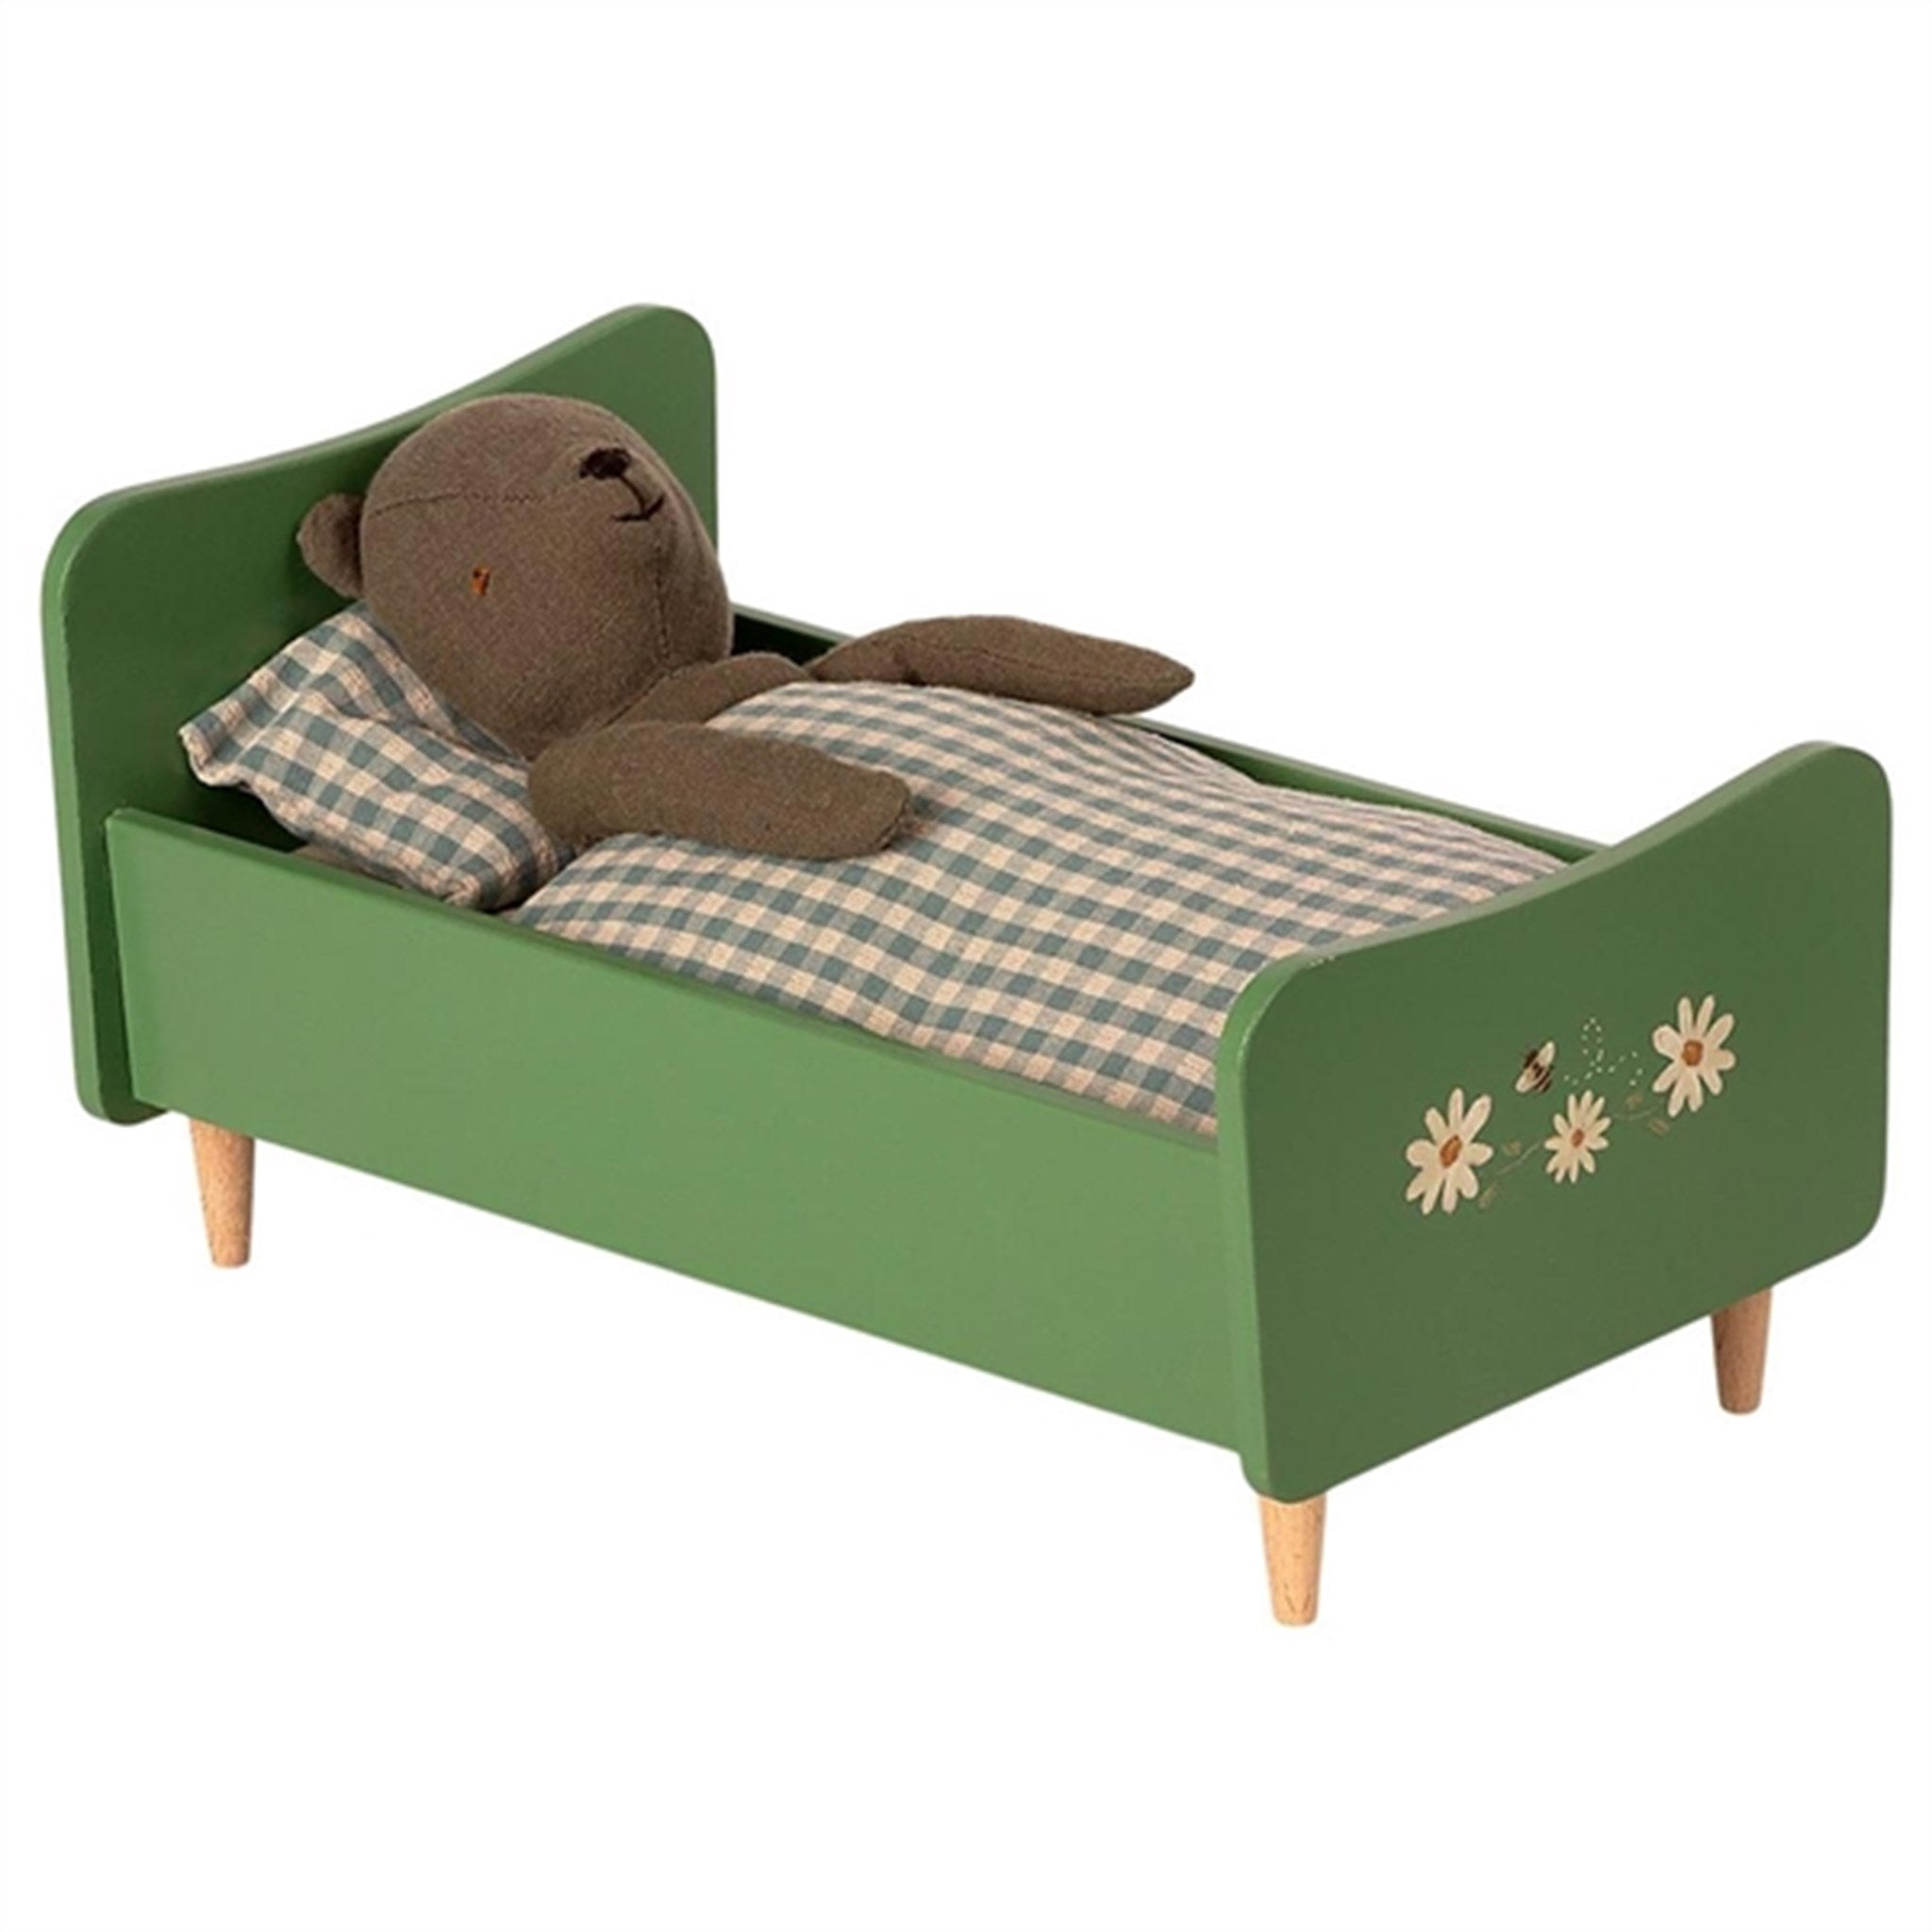 Maileg Miniature Bed Dad Teddy Dusty Green 2